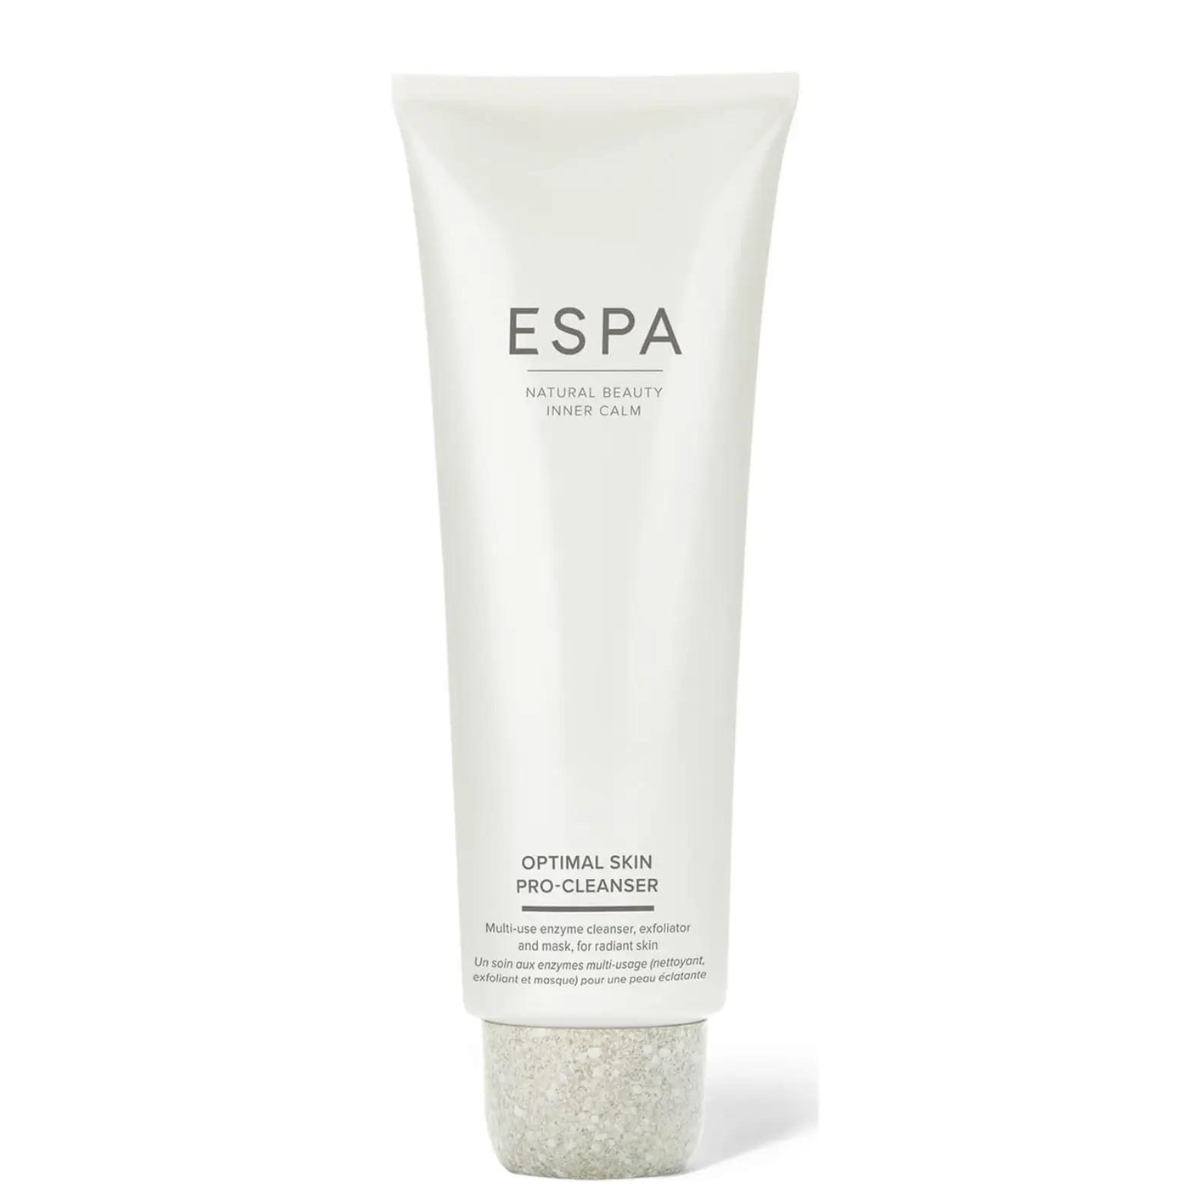 ESPA Optimal Skin Pro-Cleanser Supersize